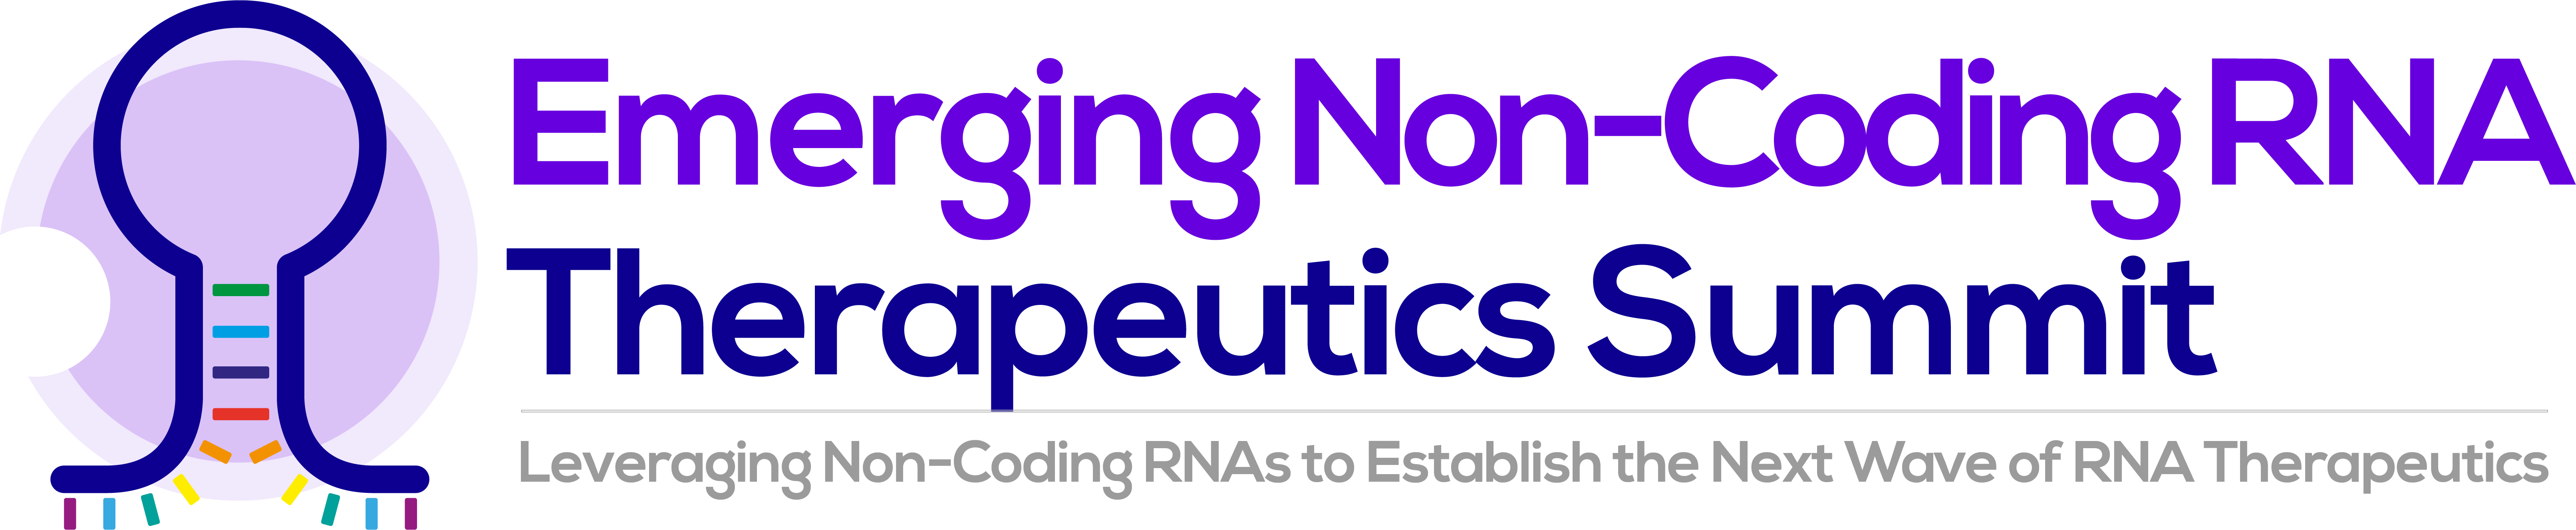 HW220618 7841 - Emerging Noncoding RNA Therapeutics Summit logo FINAL